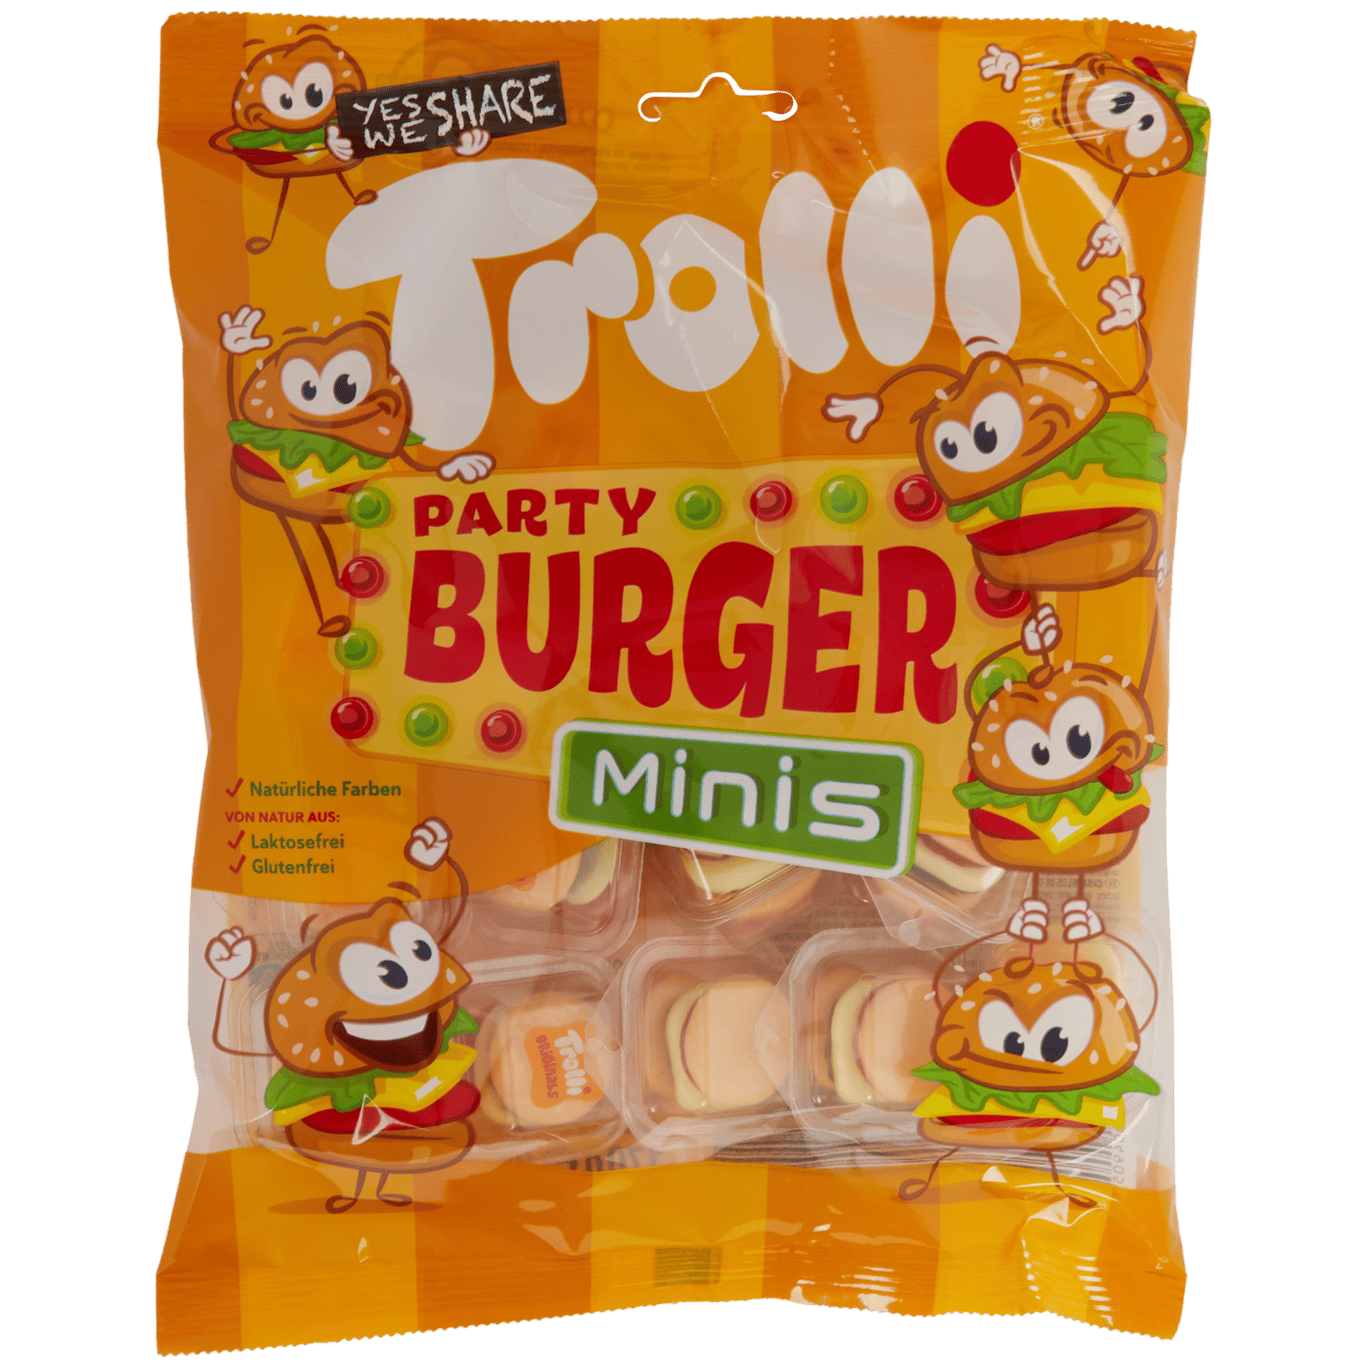 Party Burger Trolli Mini's